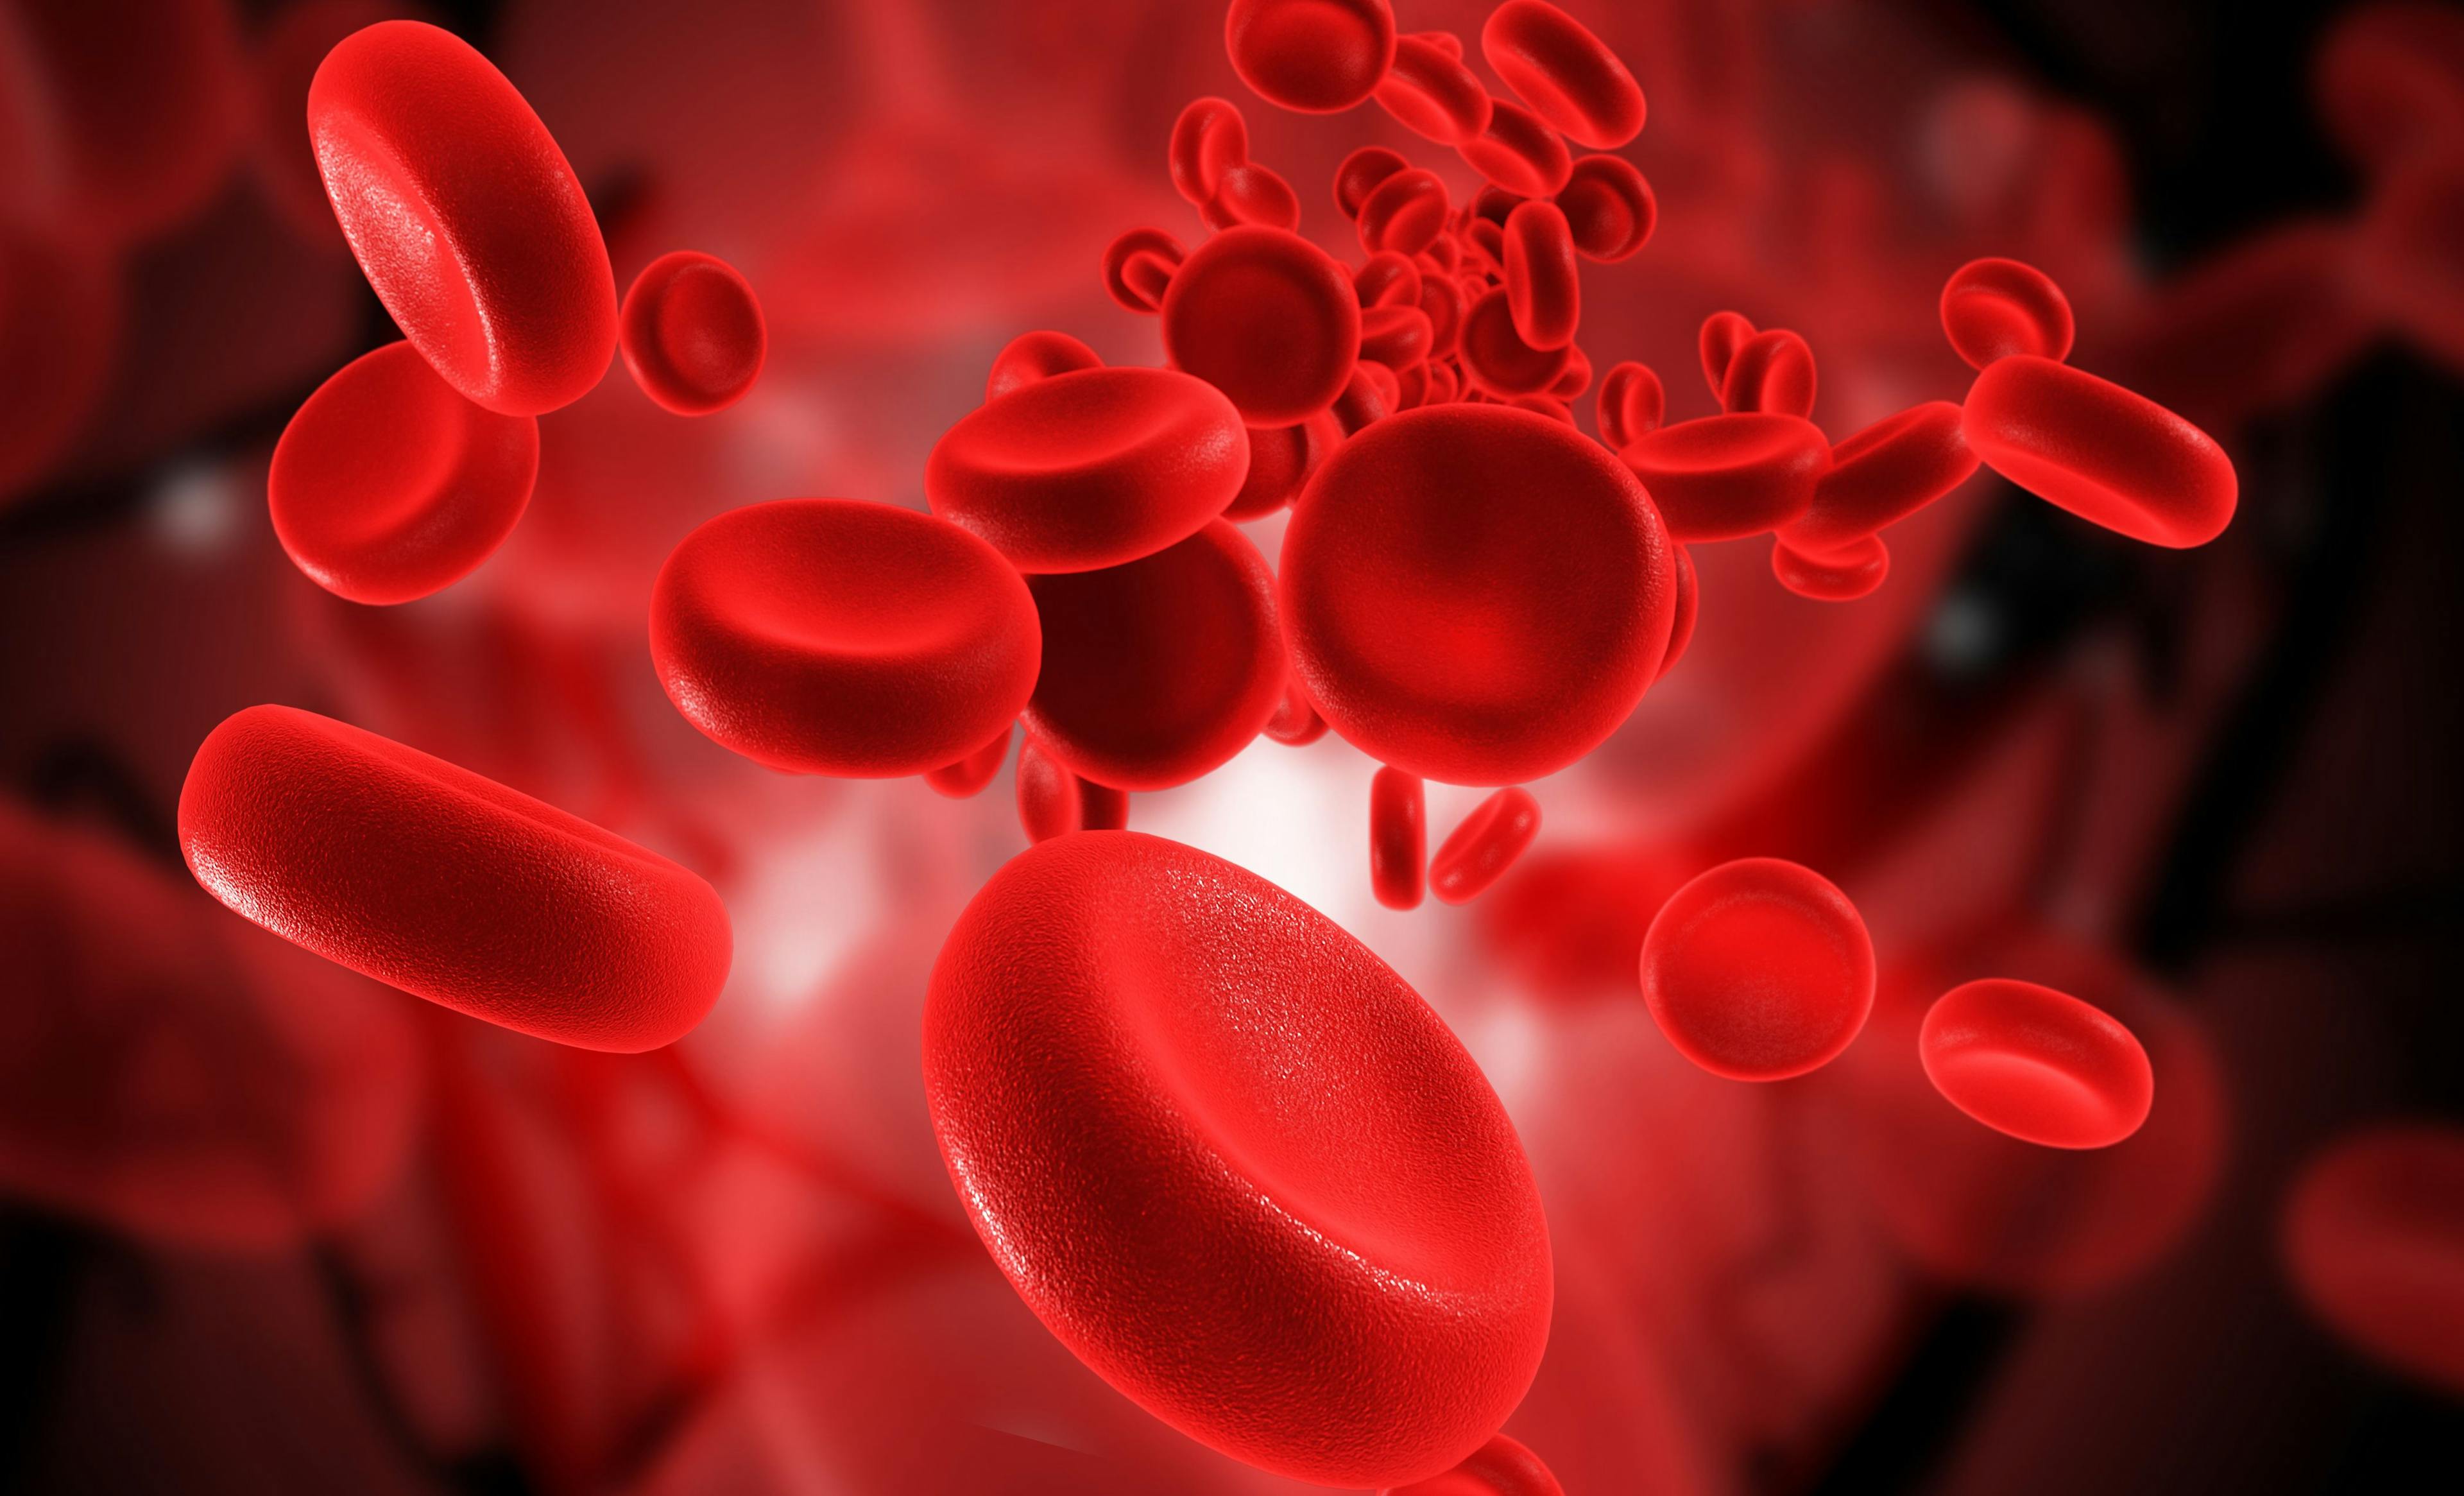 blood cancer, hematologic malignancies, MCL, MZL, blood cells | Image Credit: © abhijith3747 - [stock.adobe.com]